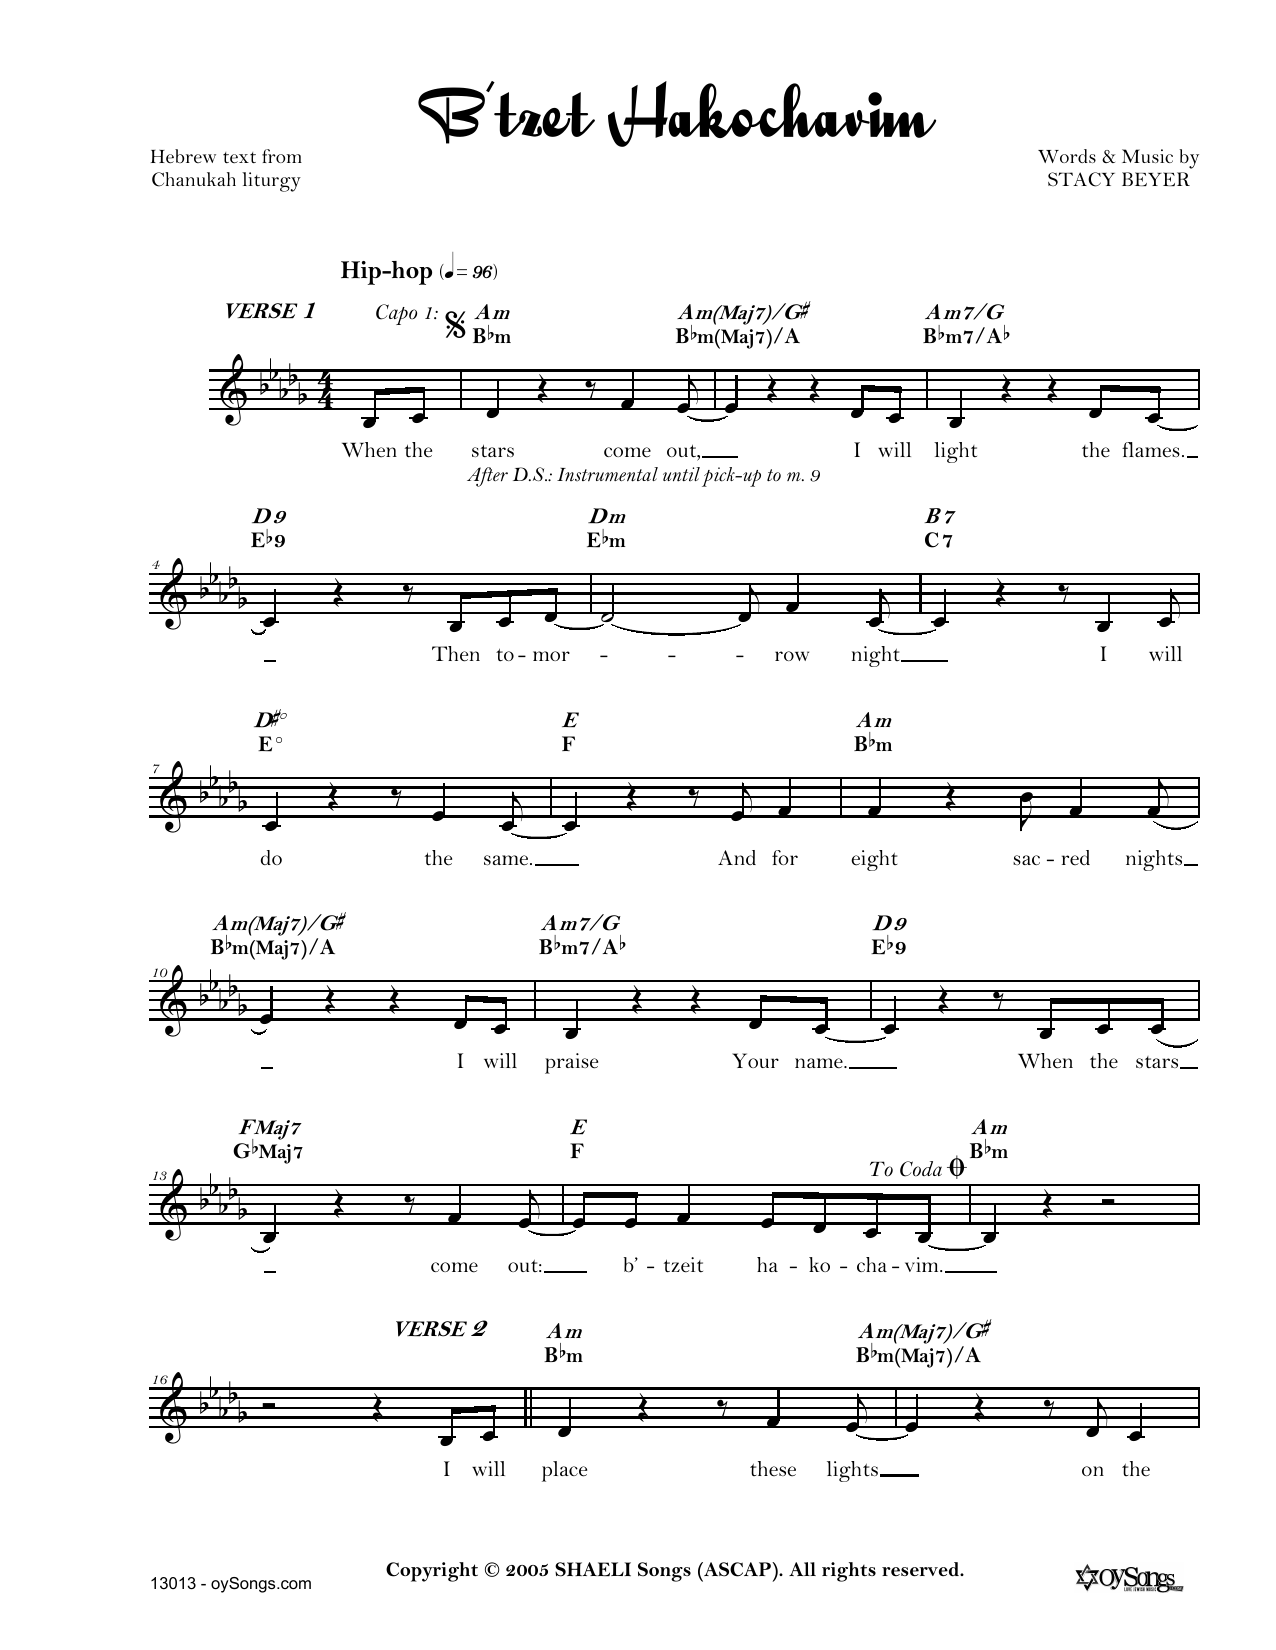 Stacy Beyer B'tzet Hakochavim Sheet Music Notes & Chords for Real Book – Melody, Lyrics & Chords - Download or Print PDF